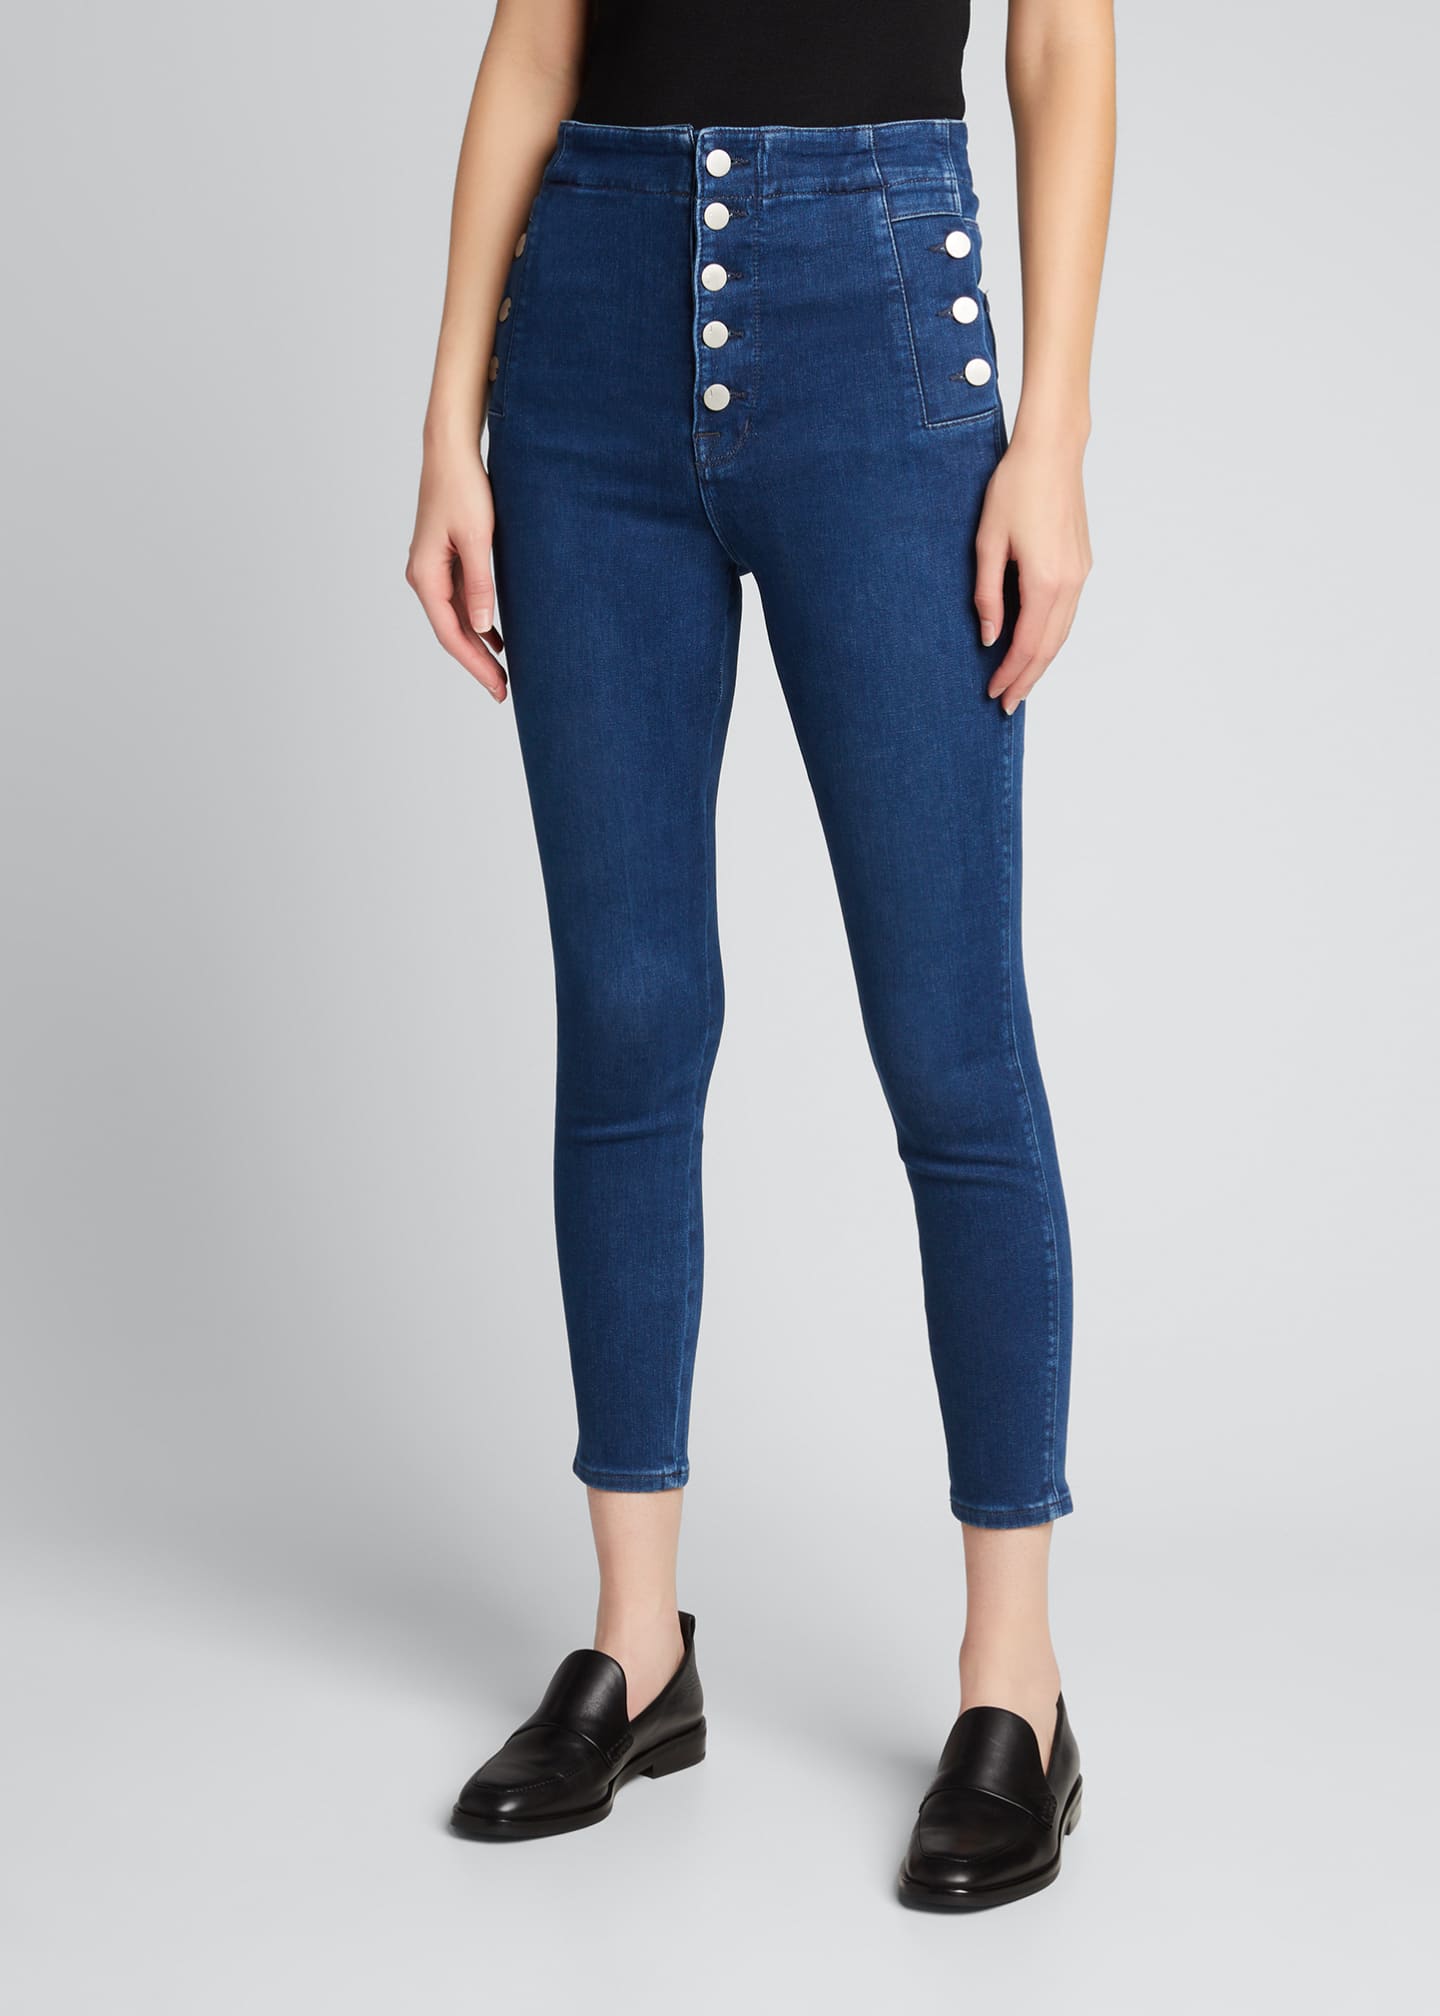 J Brand Natasha Sky High Cropped Skinny Jeans - Bergdorf Goodman